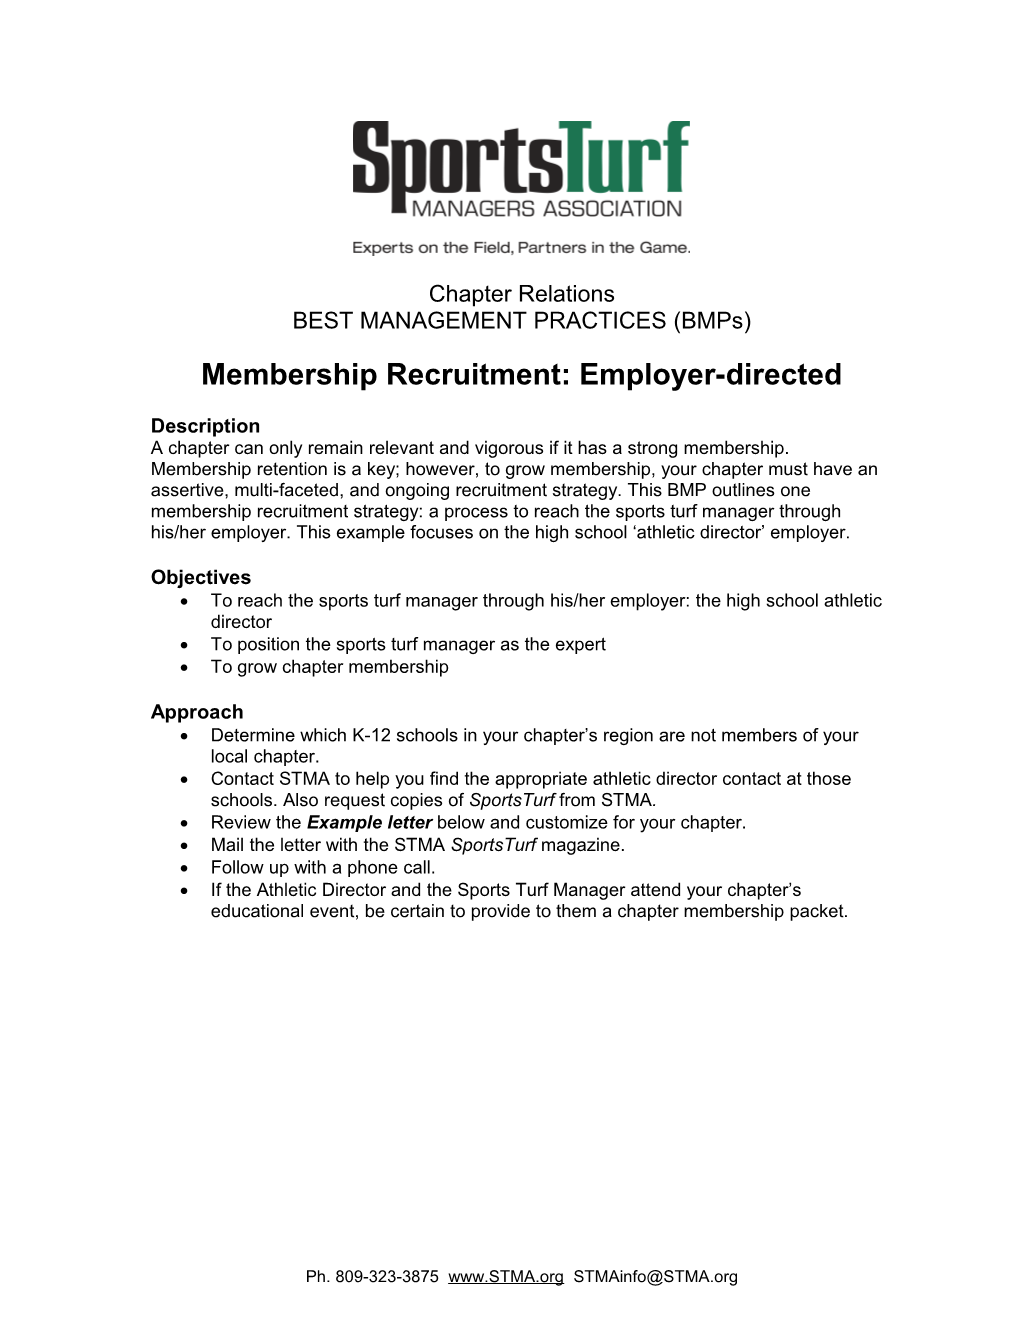 Membership Recruitment: Employer-Directed